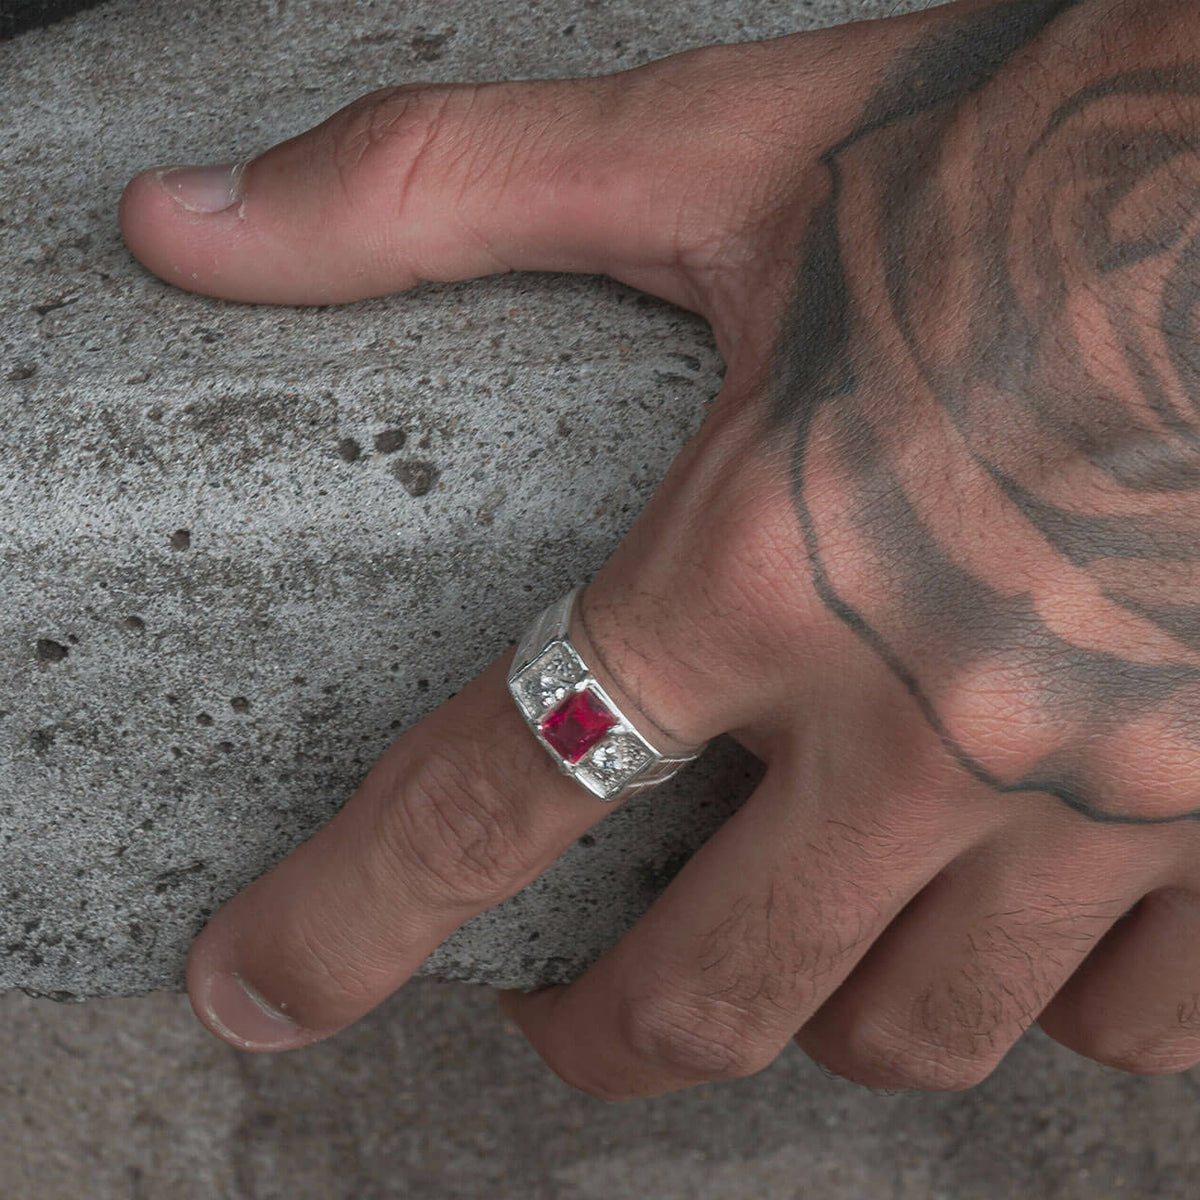 anel formatura vermelho masculino de prata 925. Anéis masculinos. Anel pedra vermelho. anel de prata masculino. anel masculino. joias masculinas. anel de formatura masculino.